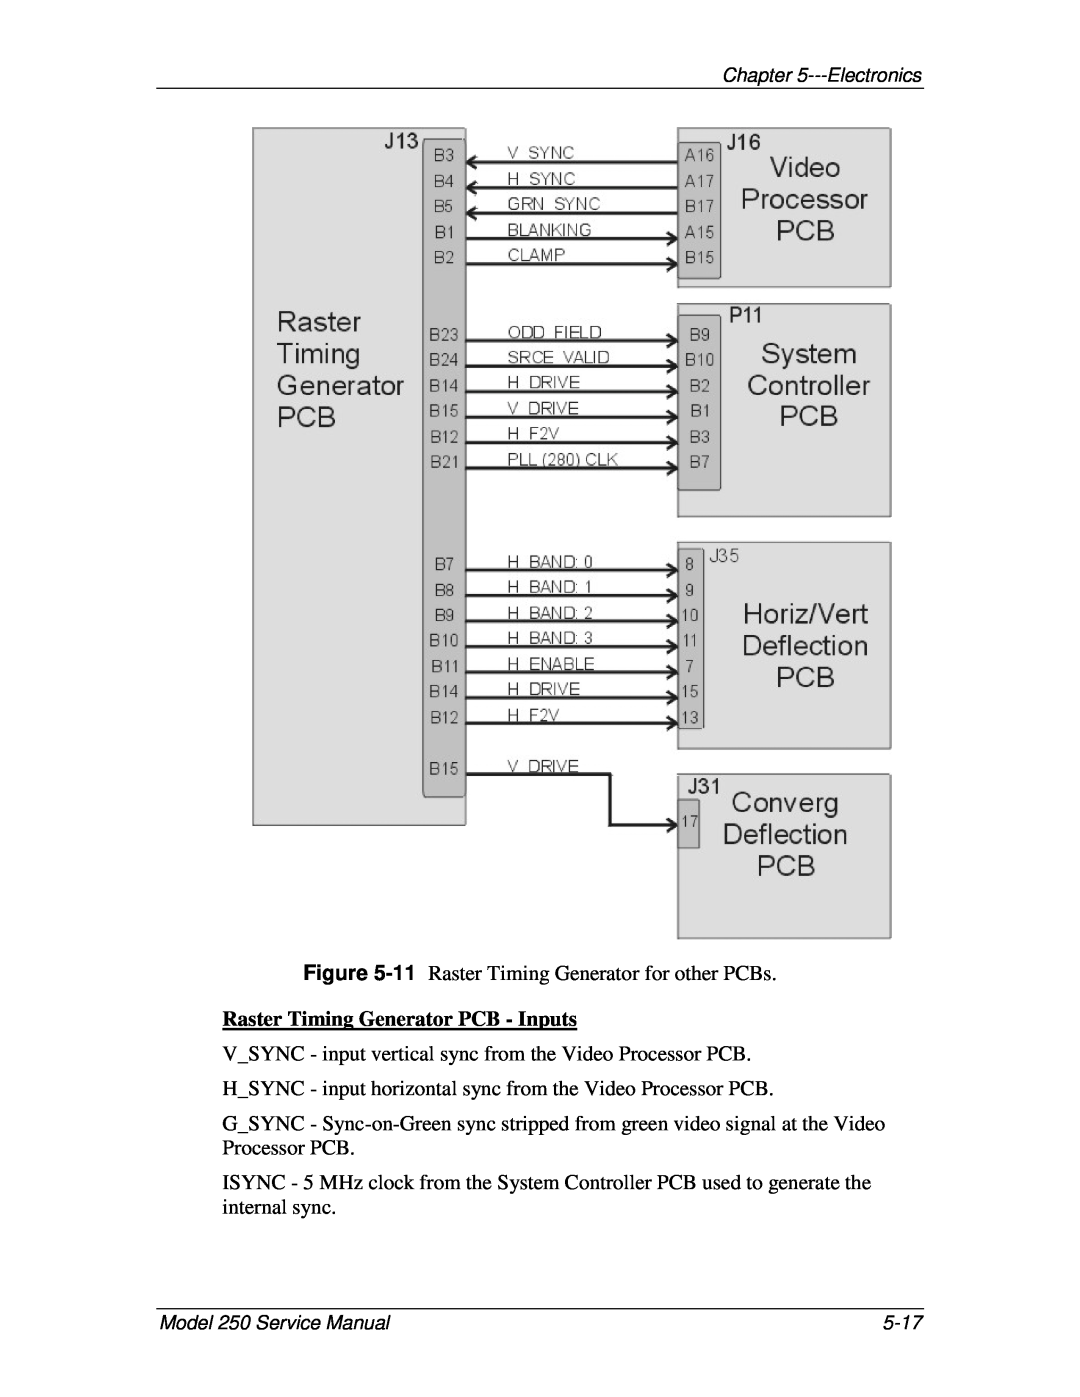 JVC 250 service manual Raster Timing Generator PCB - Inputs 